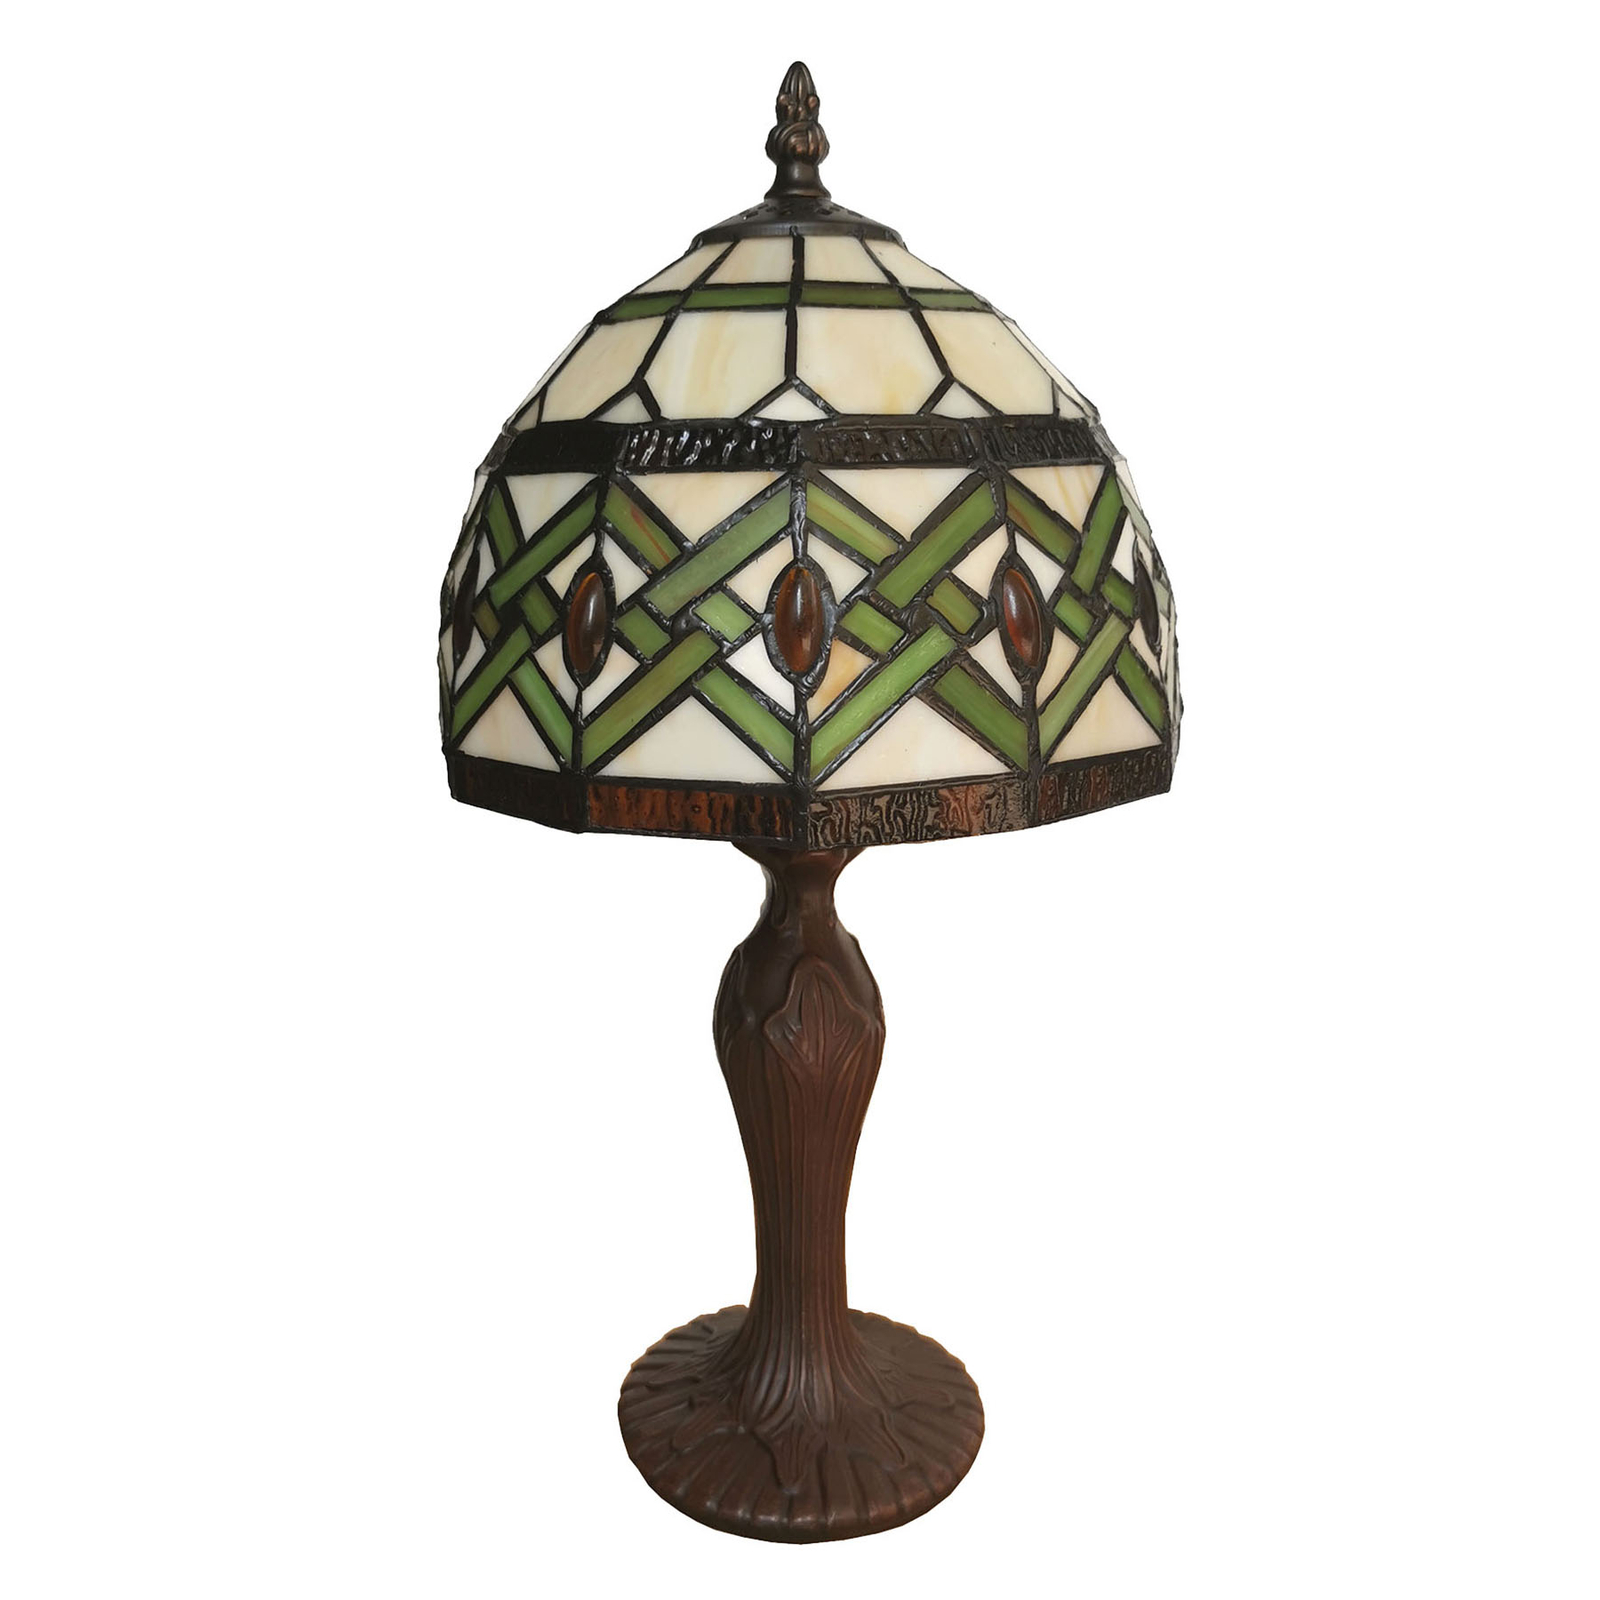 Stolná lampa 6027 sklenené tienidlo dizajn Tiffany